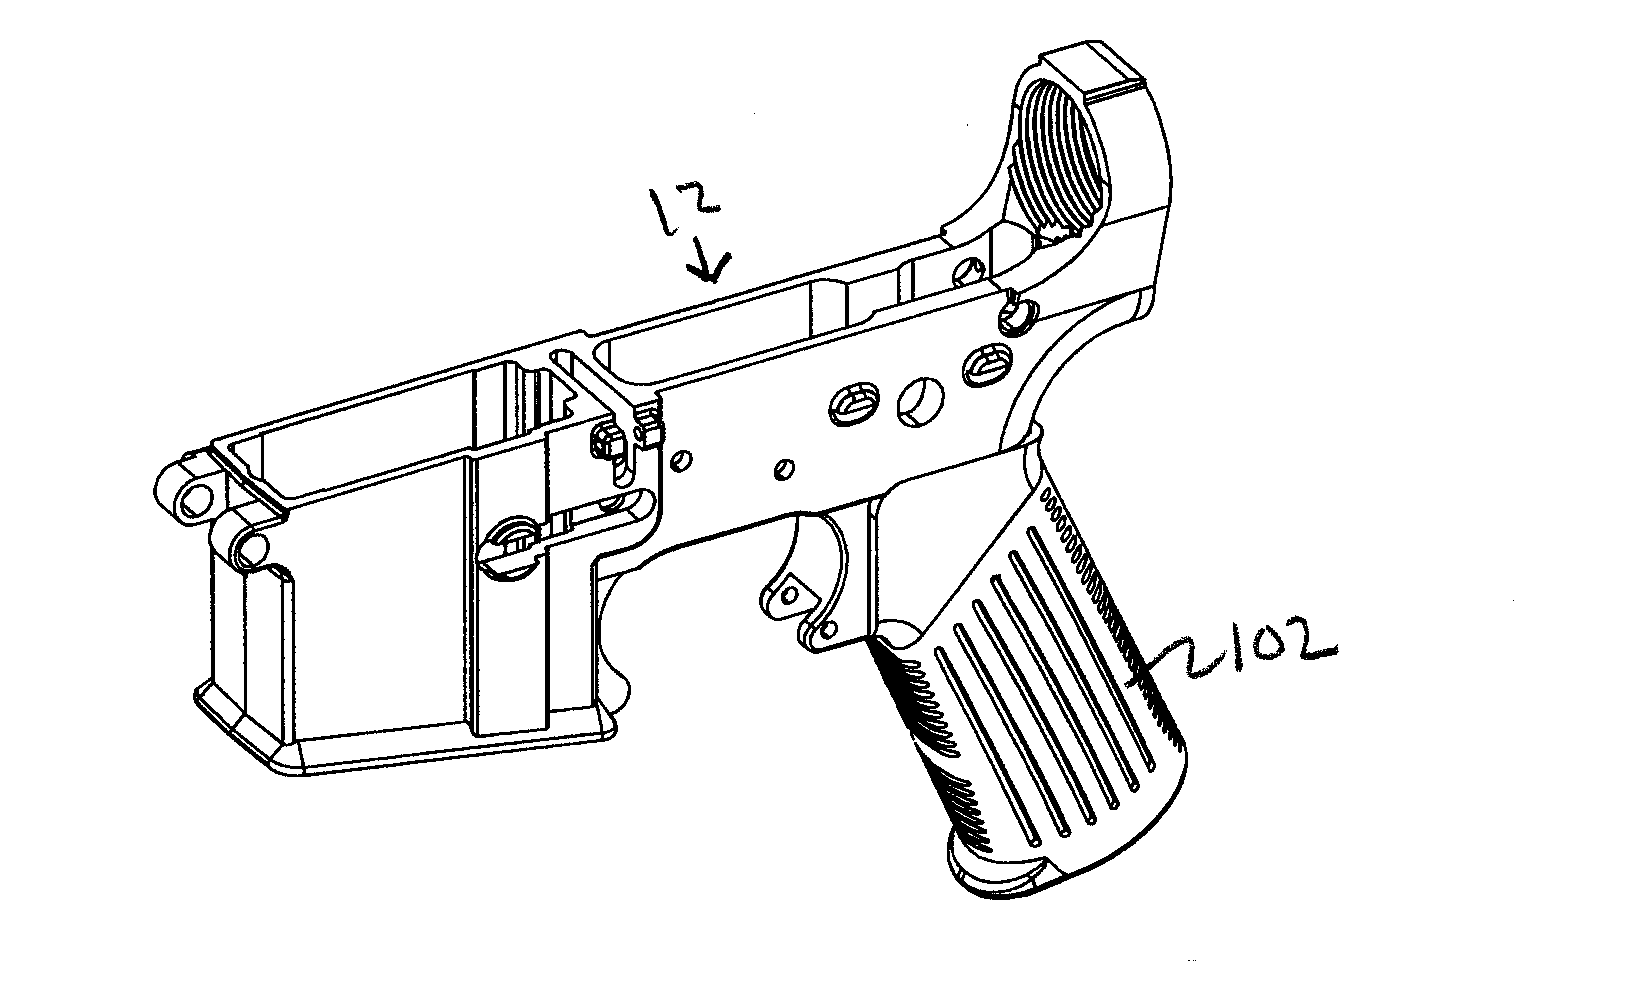 Adjustable Pistol Grip for Firearms